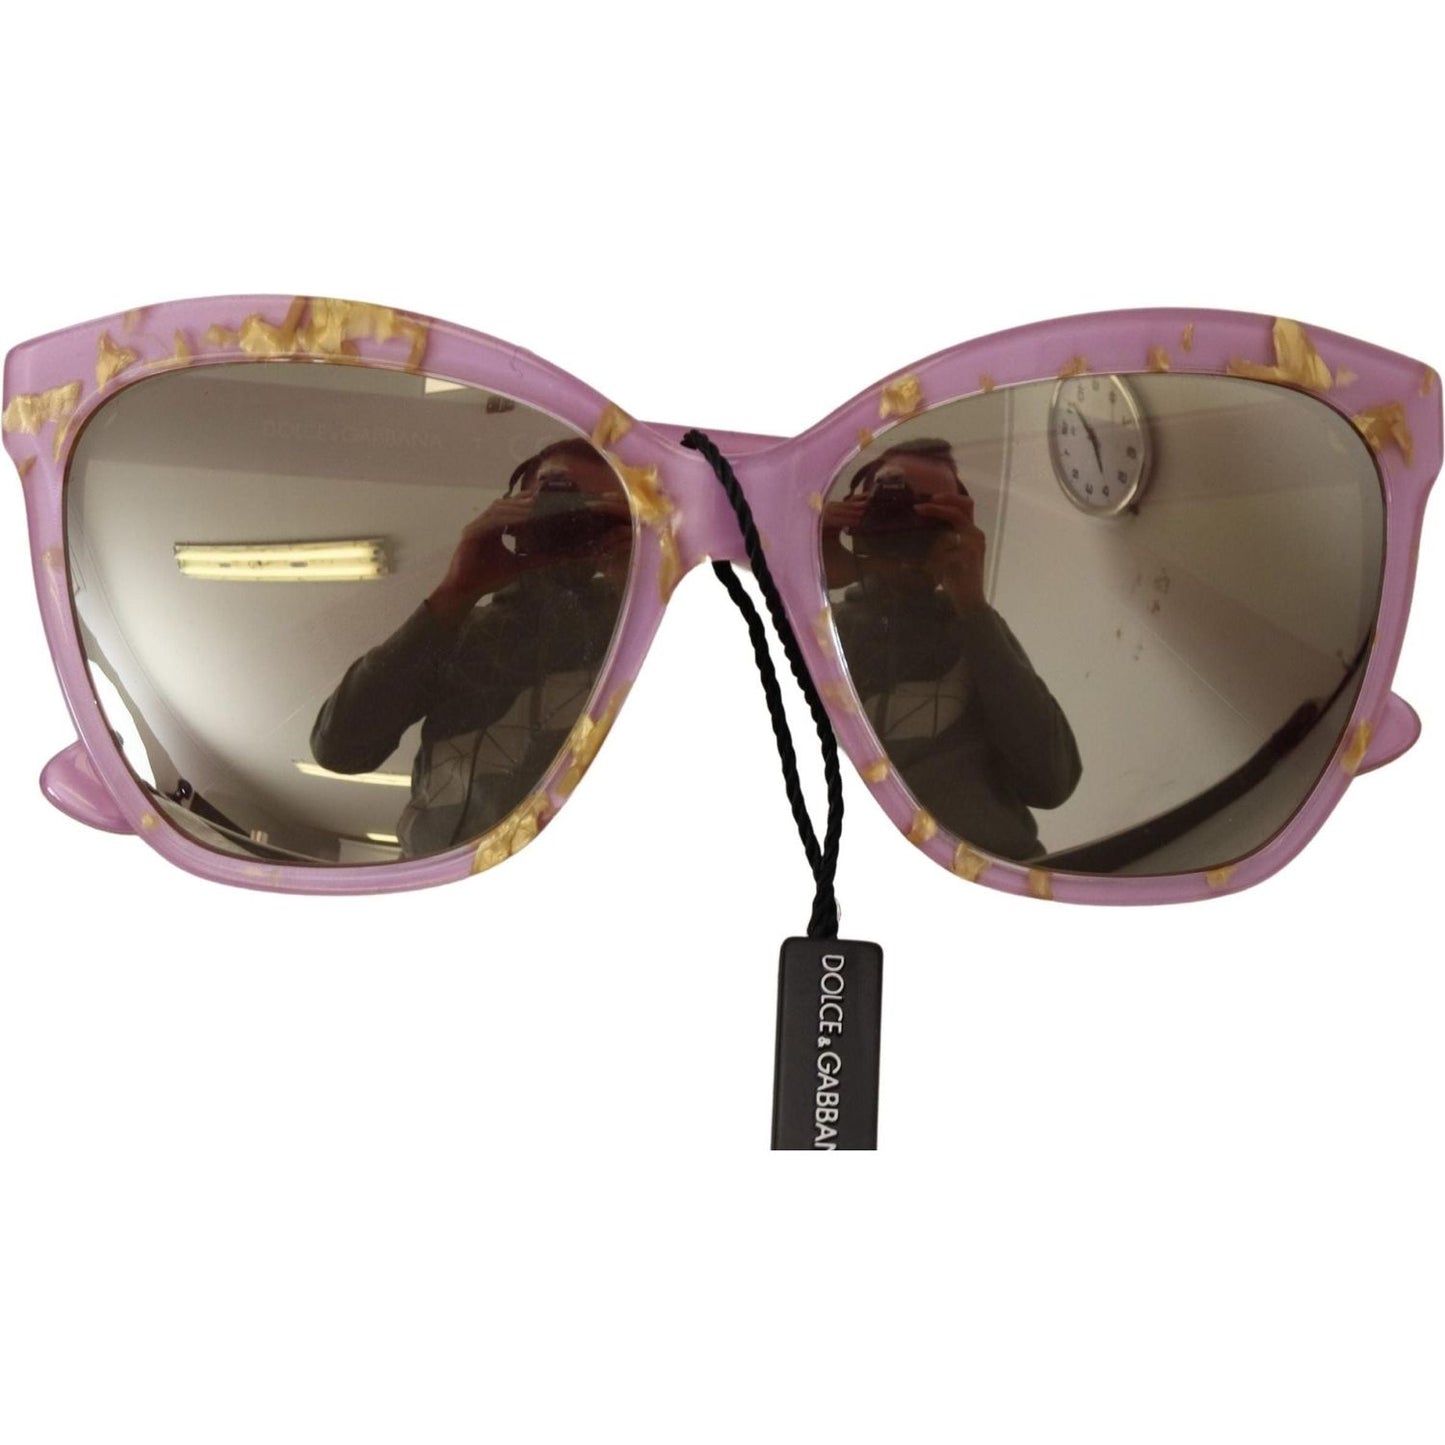 Dolce & Gabbana Elegant Violet Acetate Sunglasses violet-full-rim-rectangle-frame-shades-dg4251-sunglasses IMG_5192-scaled-69c15401-cb5.jpg